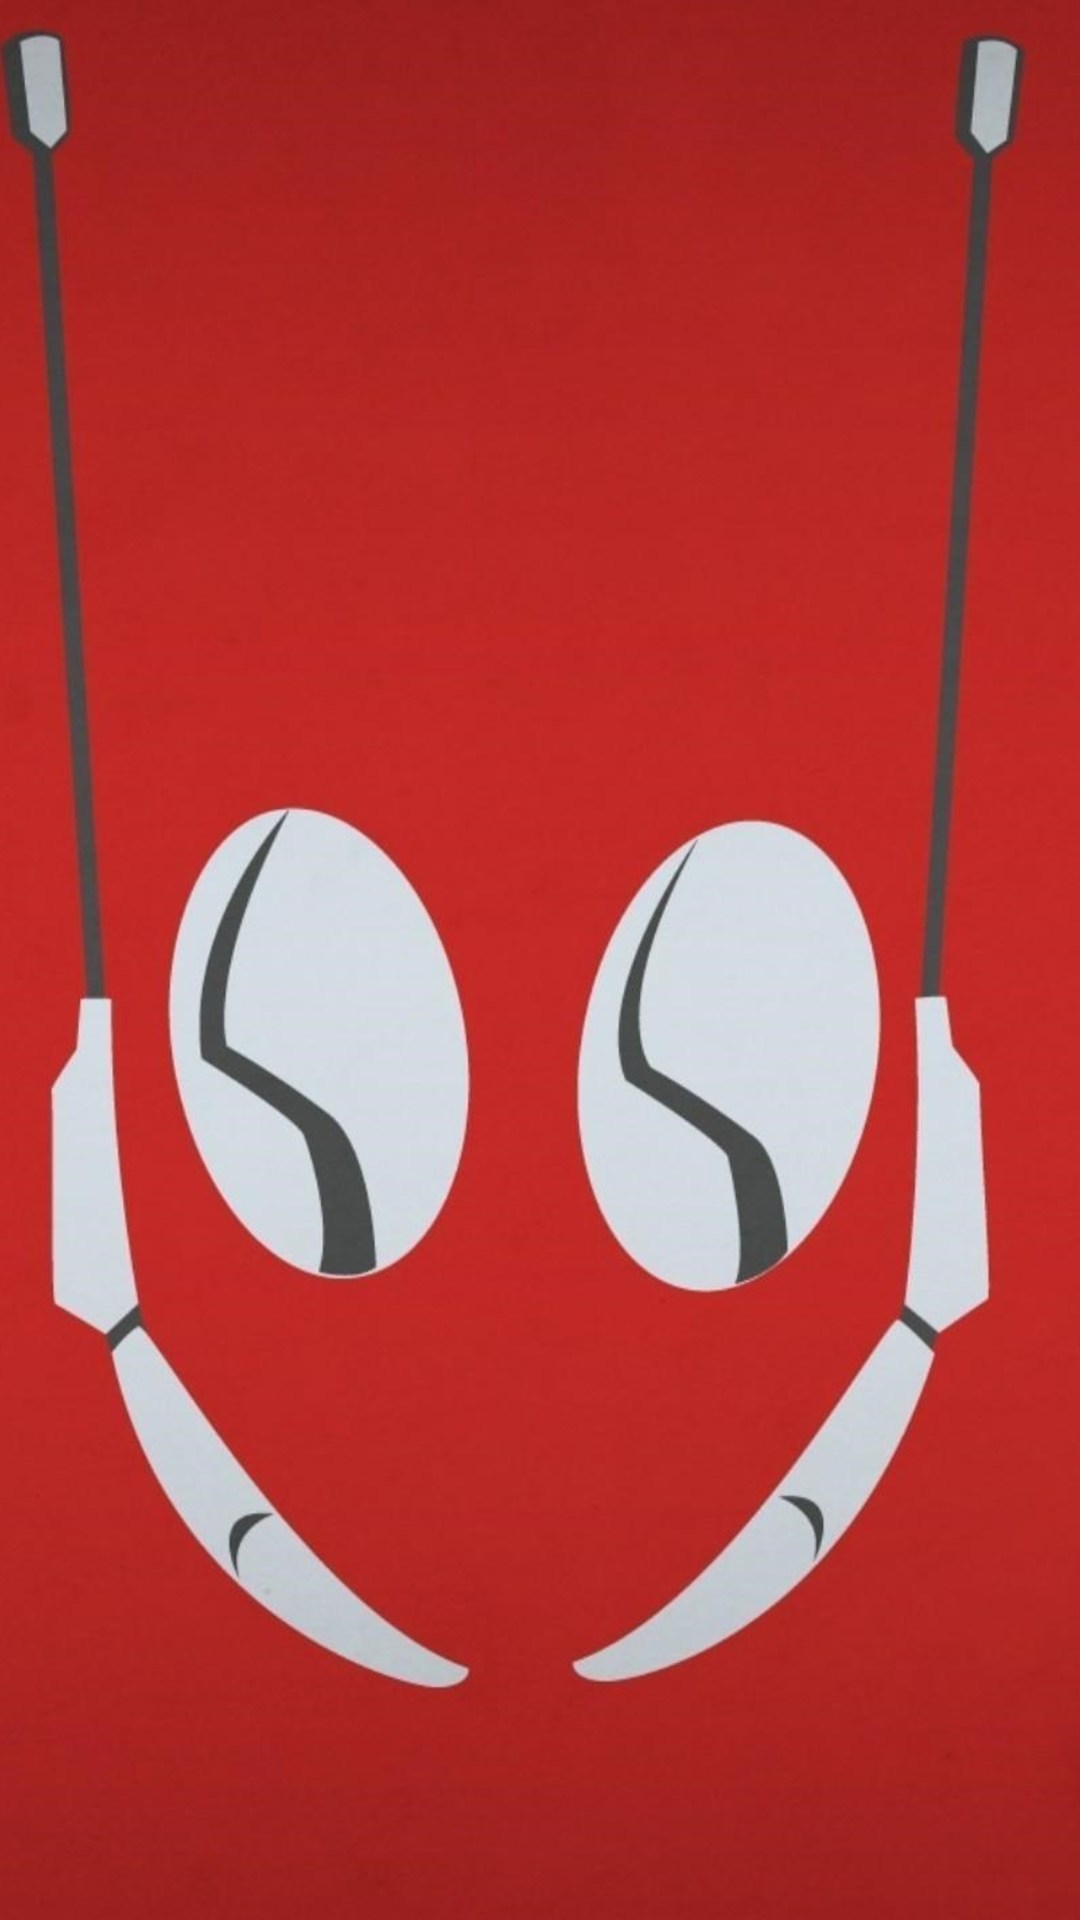 Antman Abstract Art Wallpaper 1080x1920